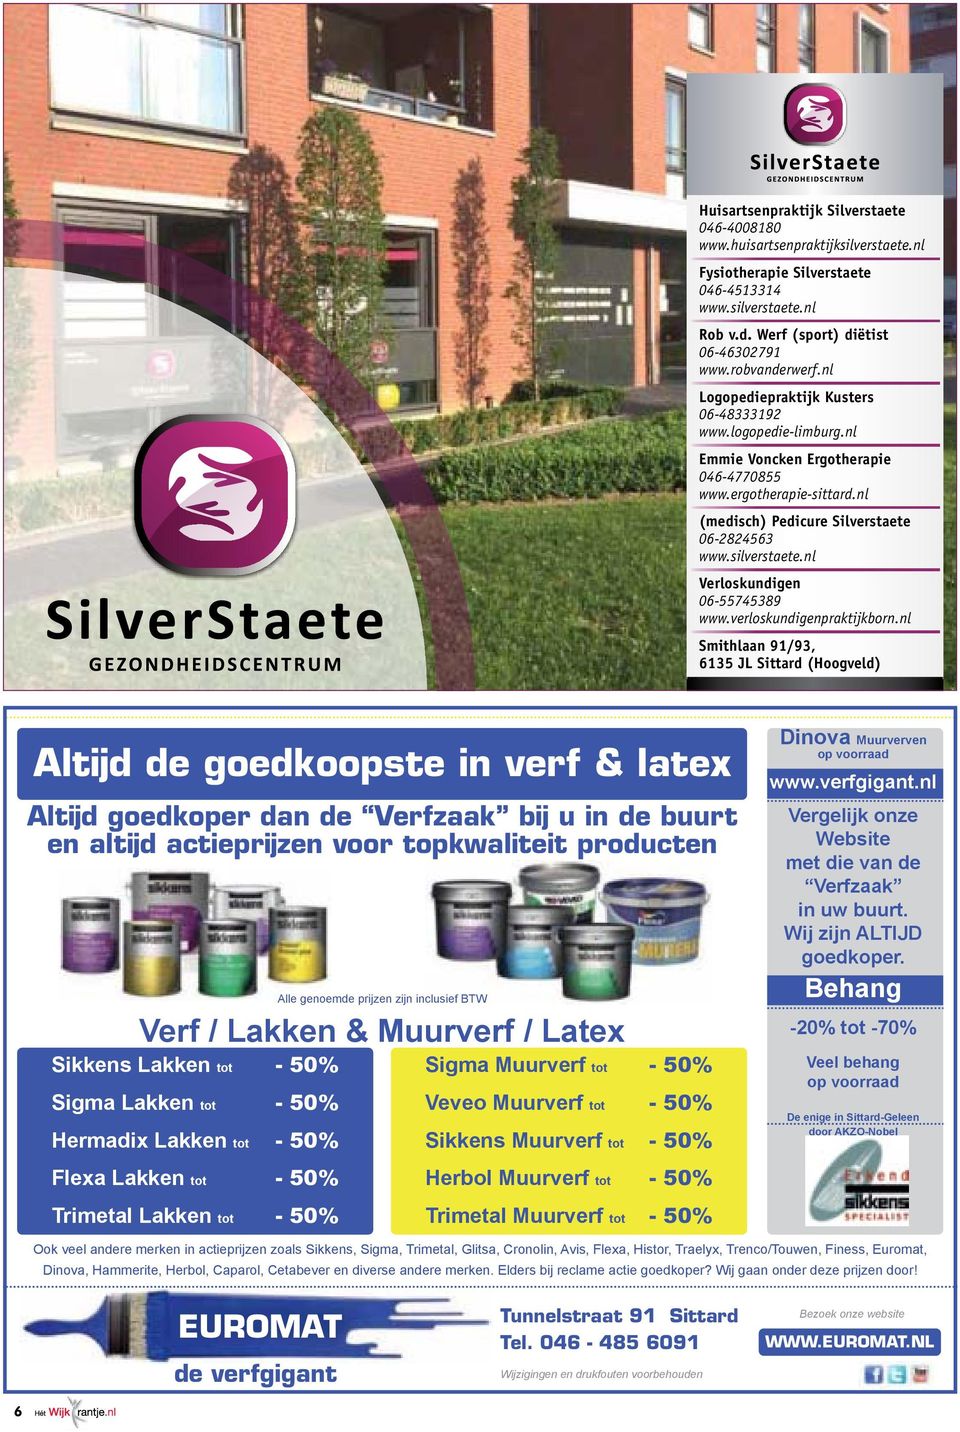 silverstaete.nl Verloskundigen 06-55745389 www.verloskundigenpraktijkborn.